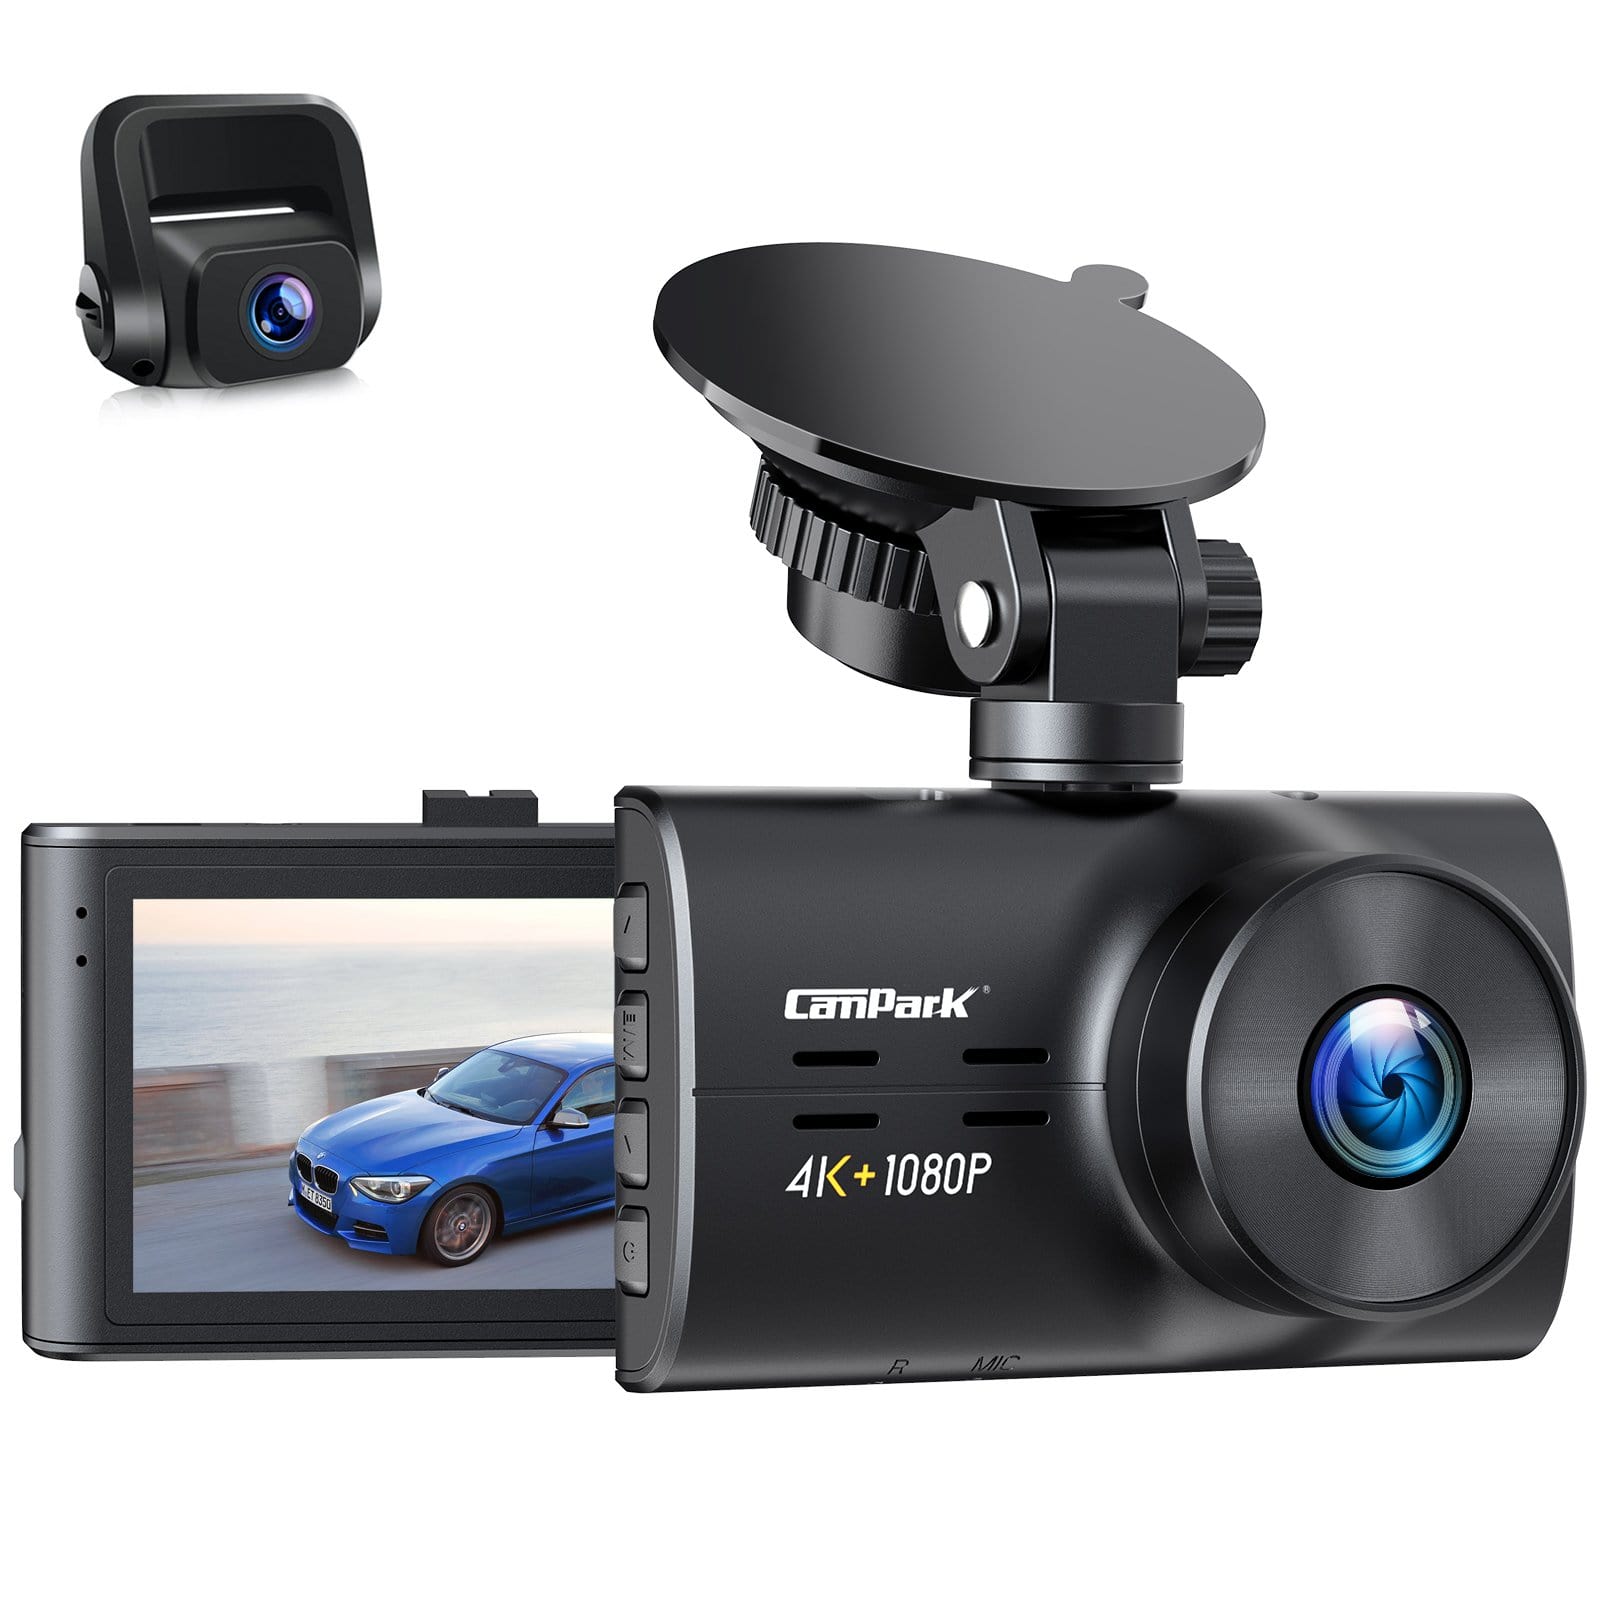 Buy Dash Cam Online, Toguard C200 Dash Cam